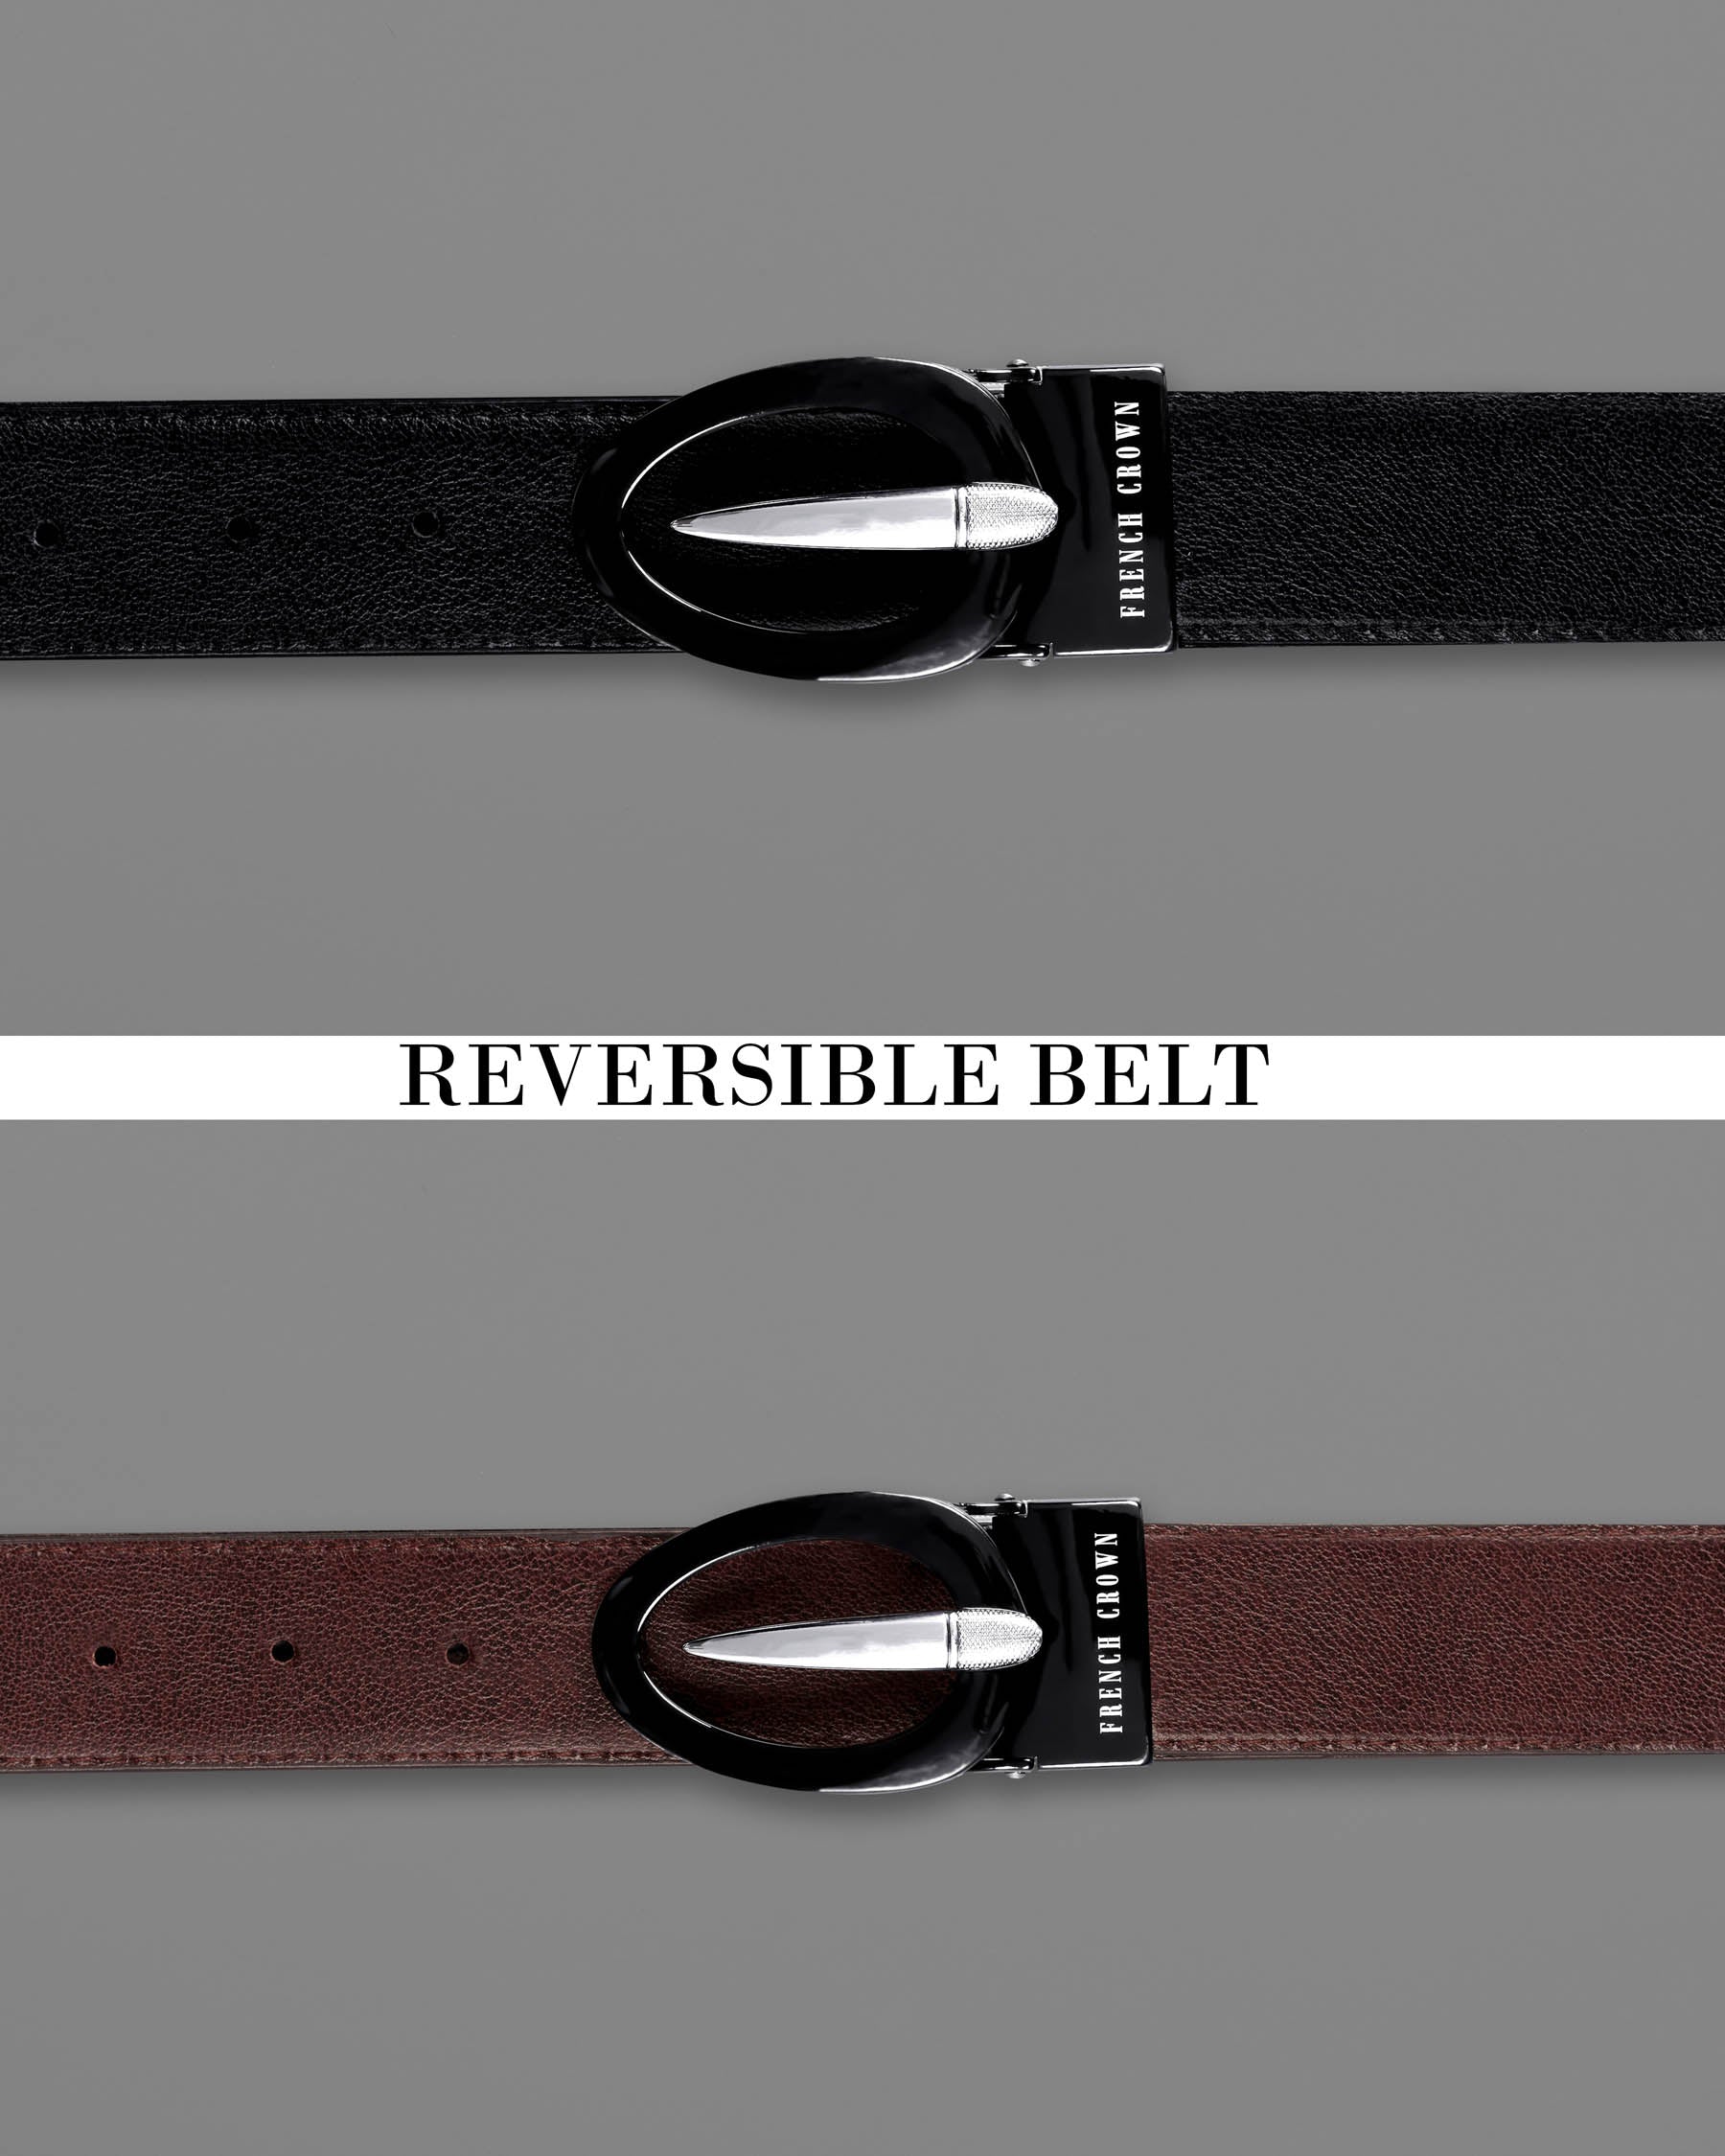 Glossy Black and Silver Oval  buckled Reversible jade Black and Brown Slight Textured Vegan Leather Handcrafted Belt BT027-28, BT027-30, BT027-32, BT027-34, BT027-36, BT027-38 